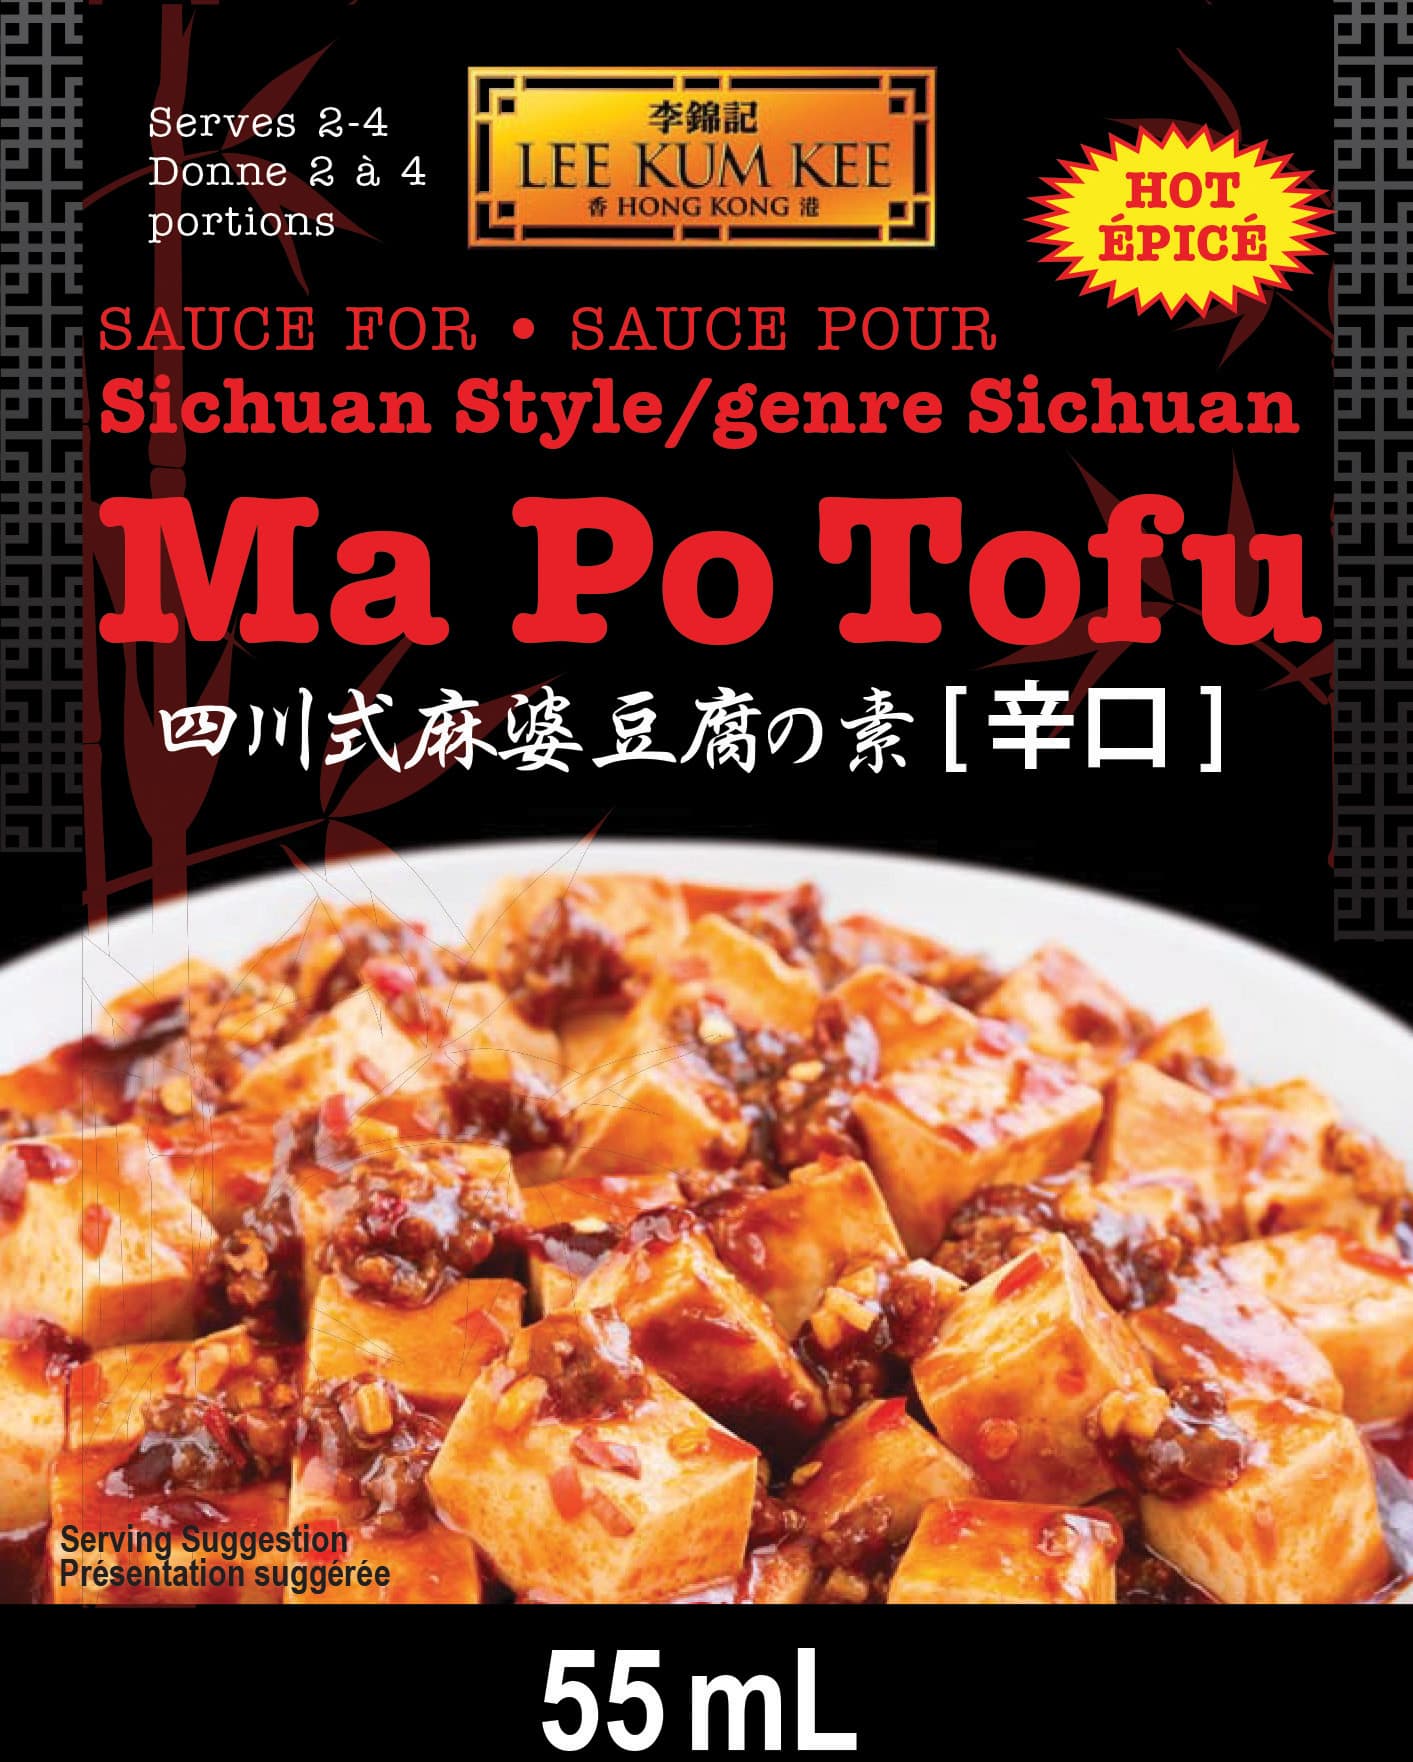 Sauce for Sichuan Style Ma Po Tofu 55ml 